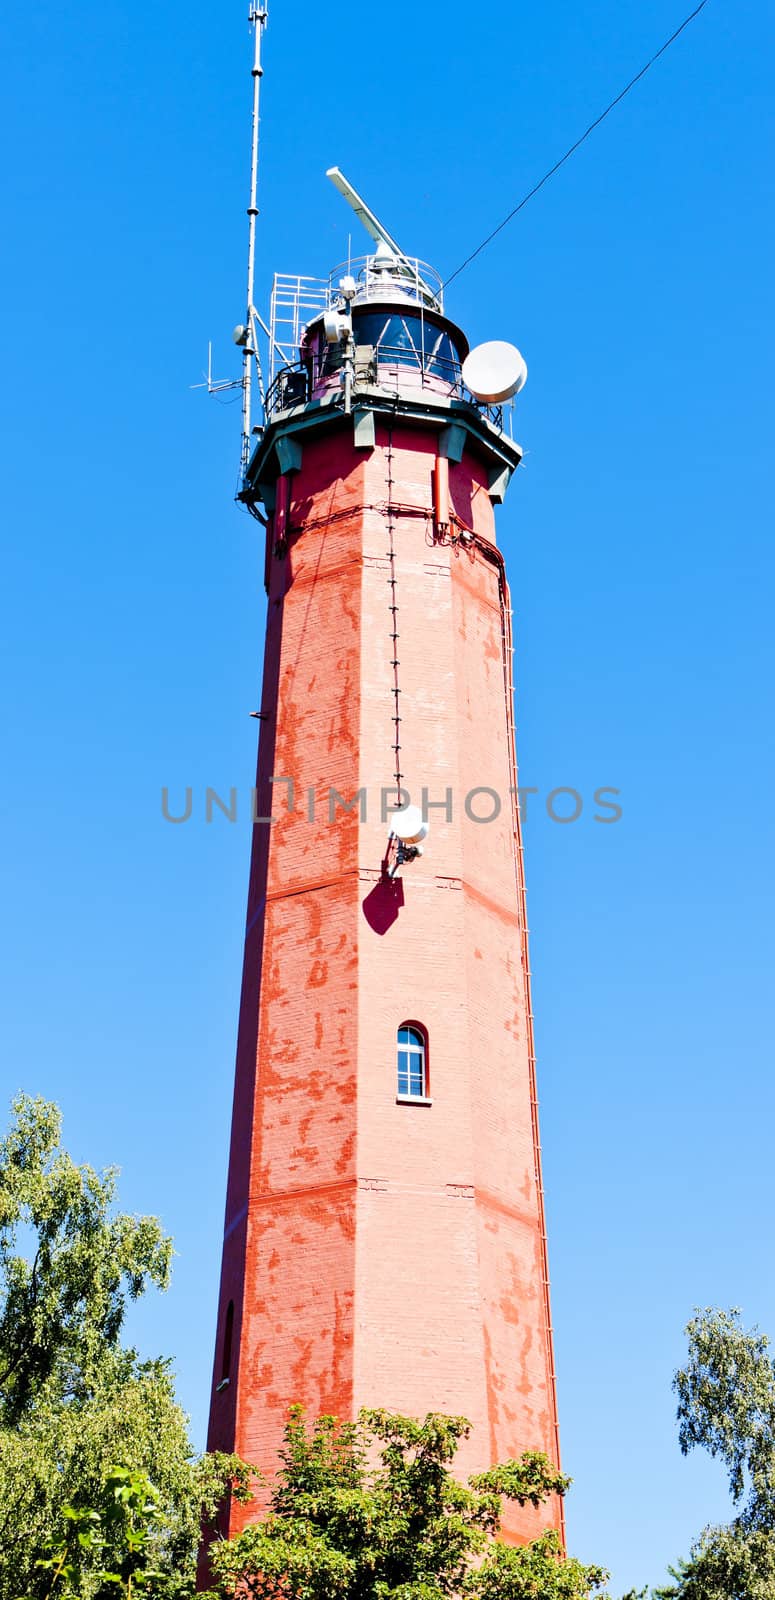 lighthouse Latia Morska in Hel, Pomerania, Poland